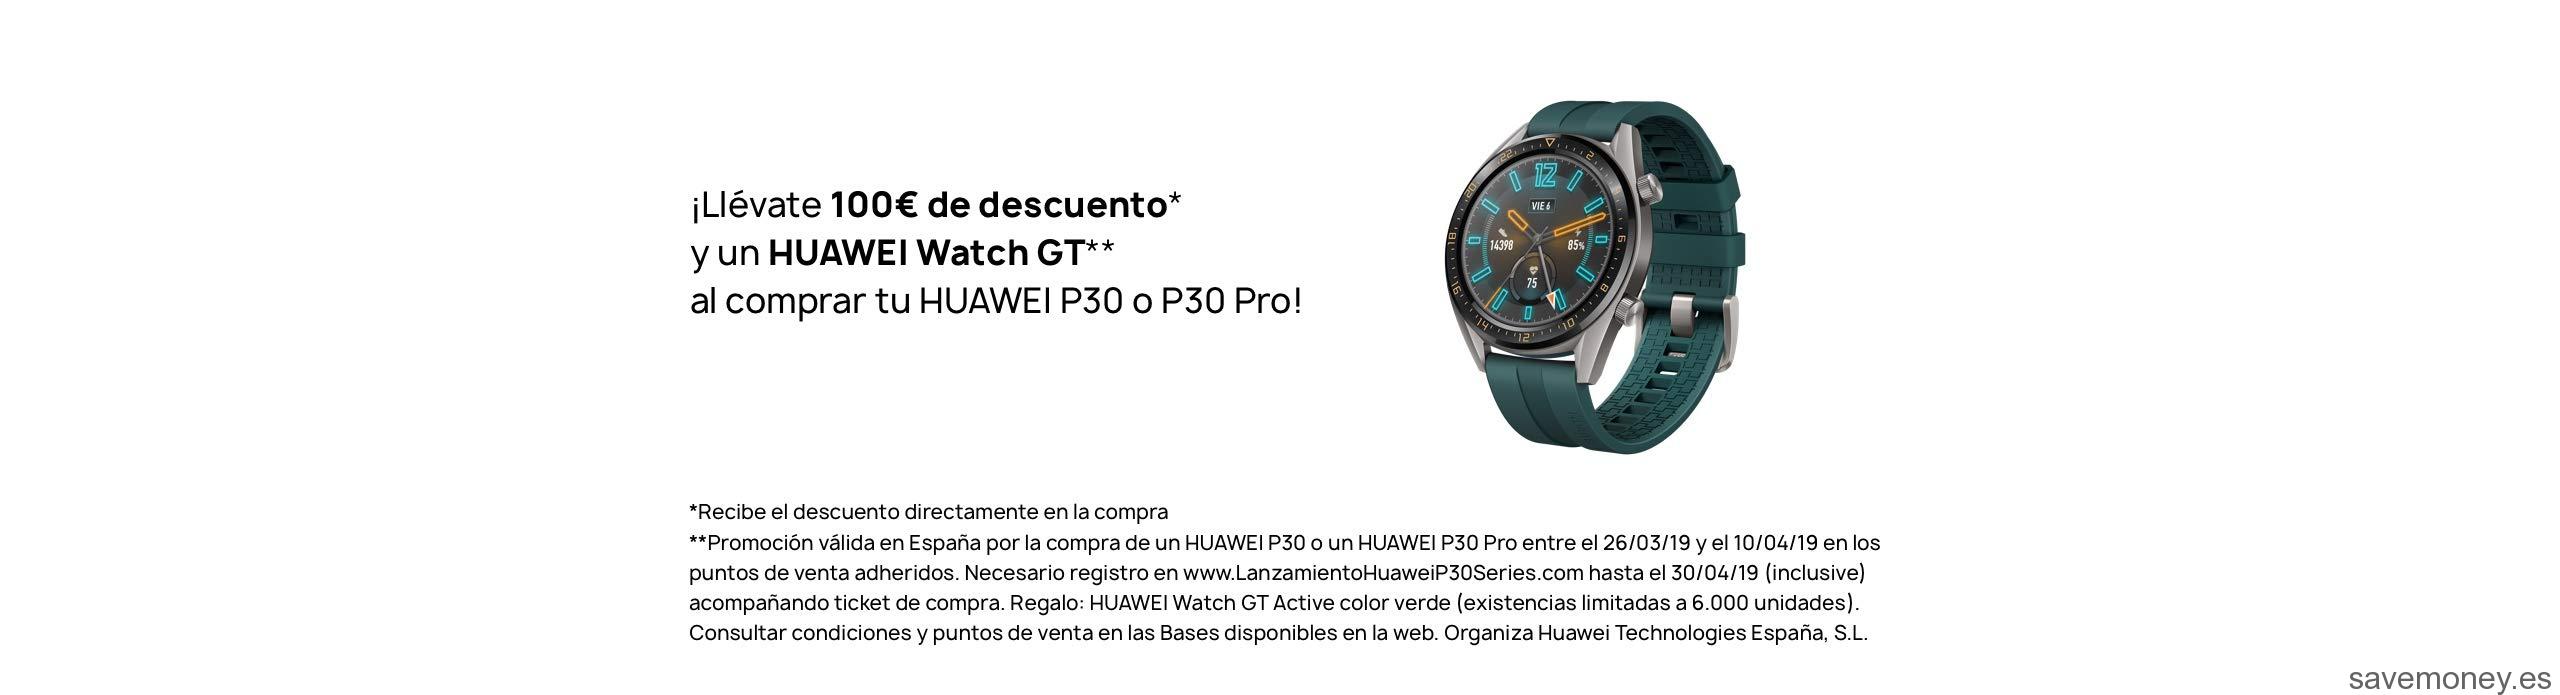 Nuevo Huawei P30